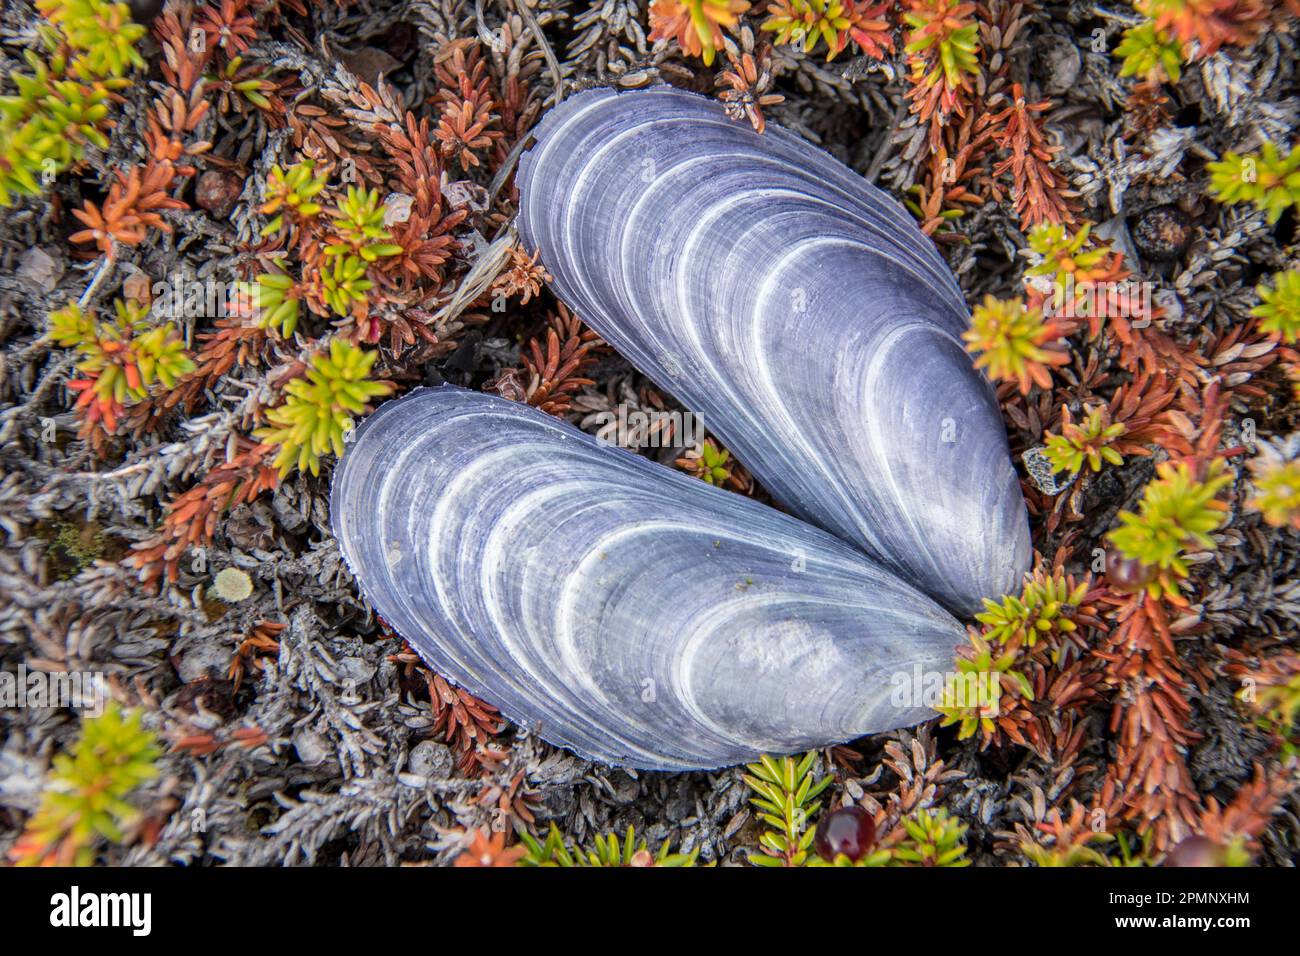 Mussel shell on tundra vegetation; Ilulissat, Greenland Stock Photo